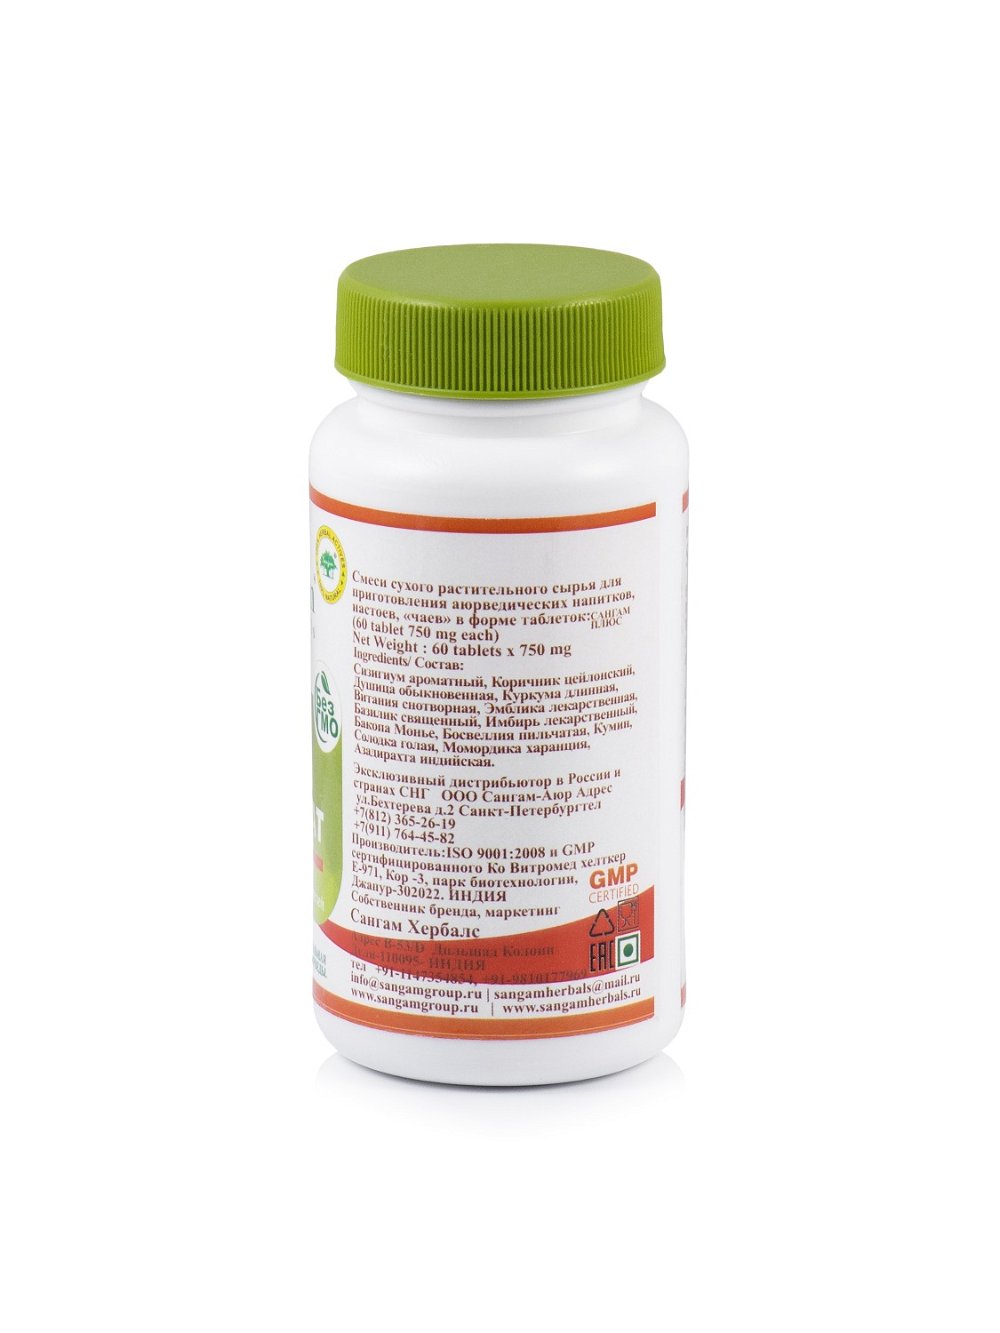 Аноксидат Sangam Herbals (60 таблеток), 